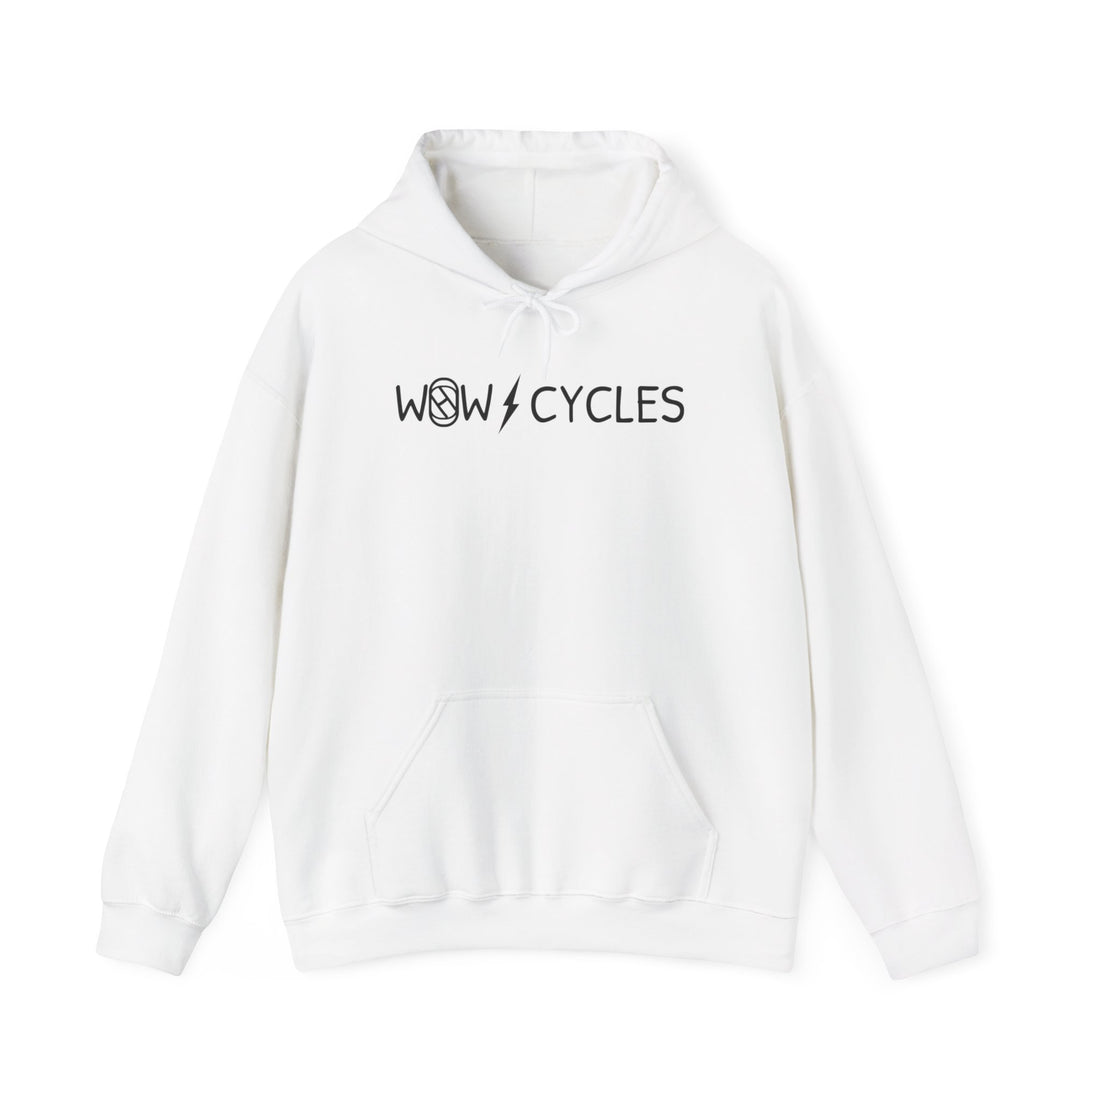 Oh Wow Cycles Hooded Sweatshirt